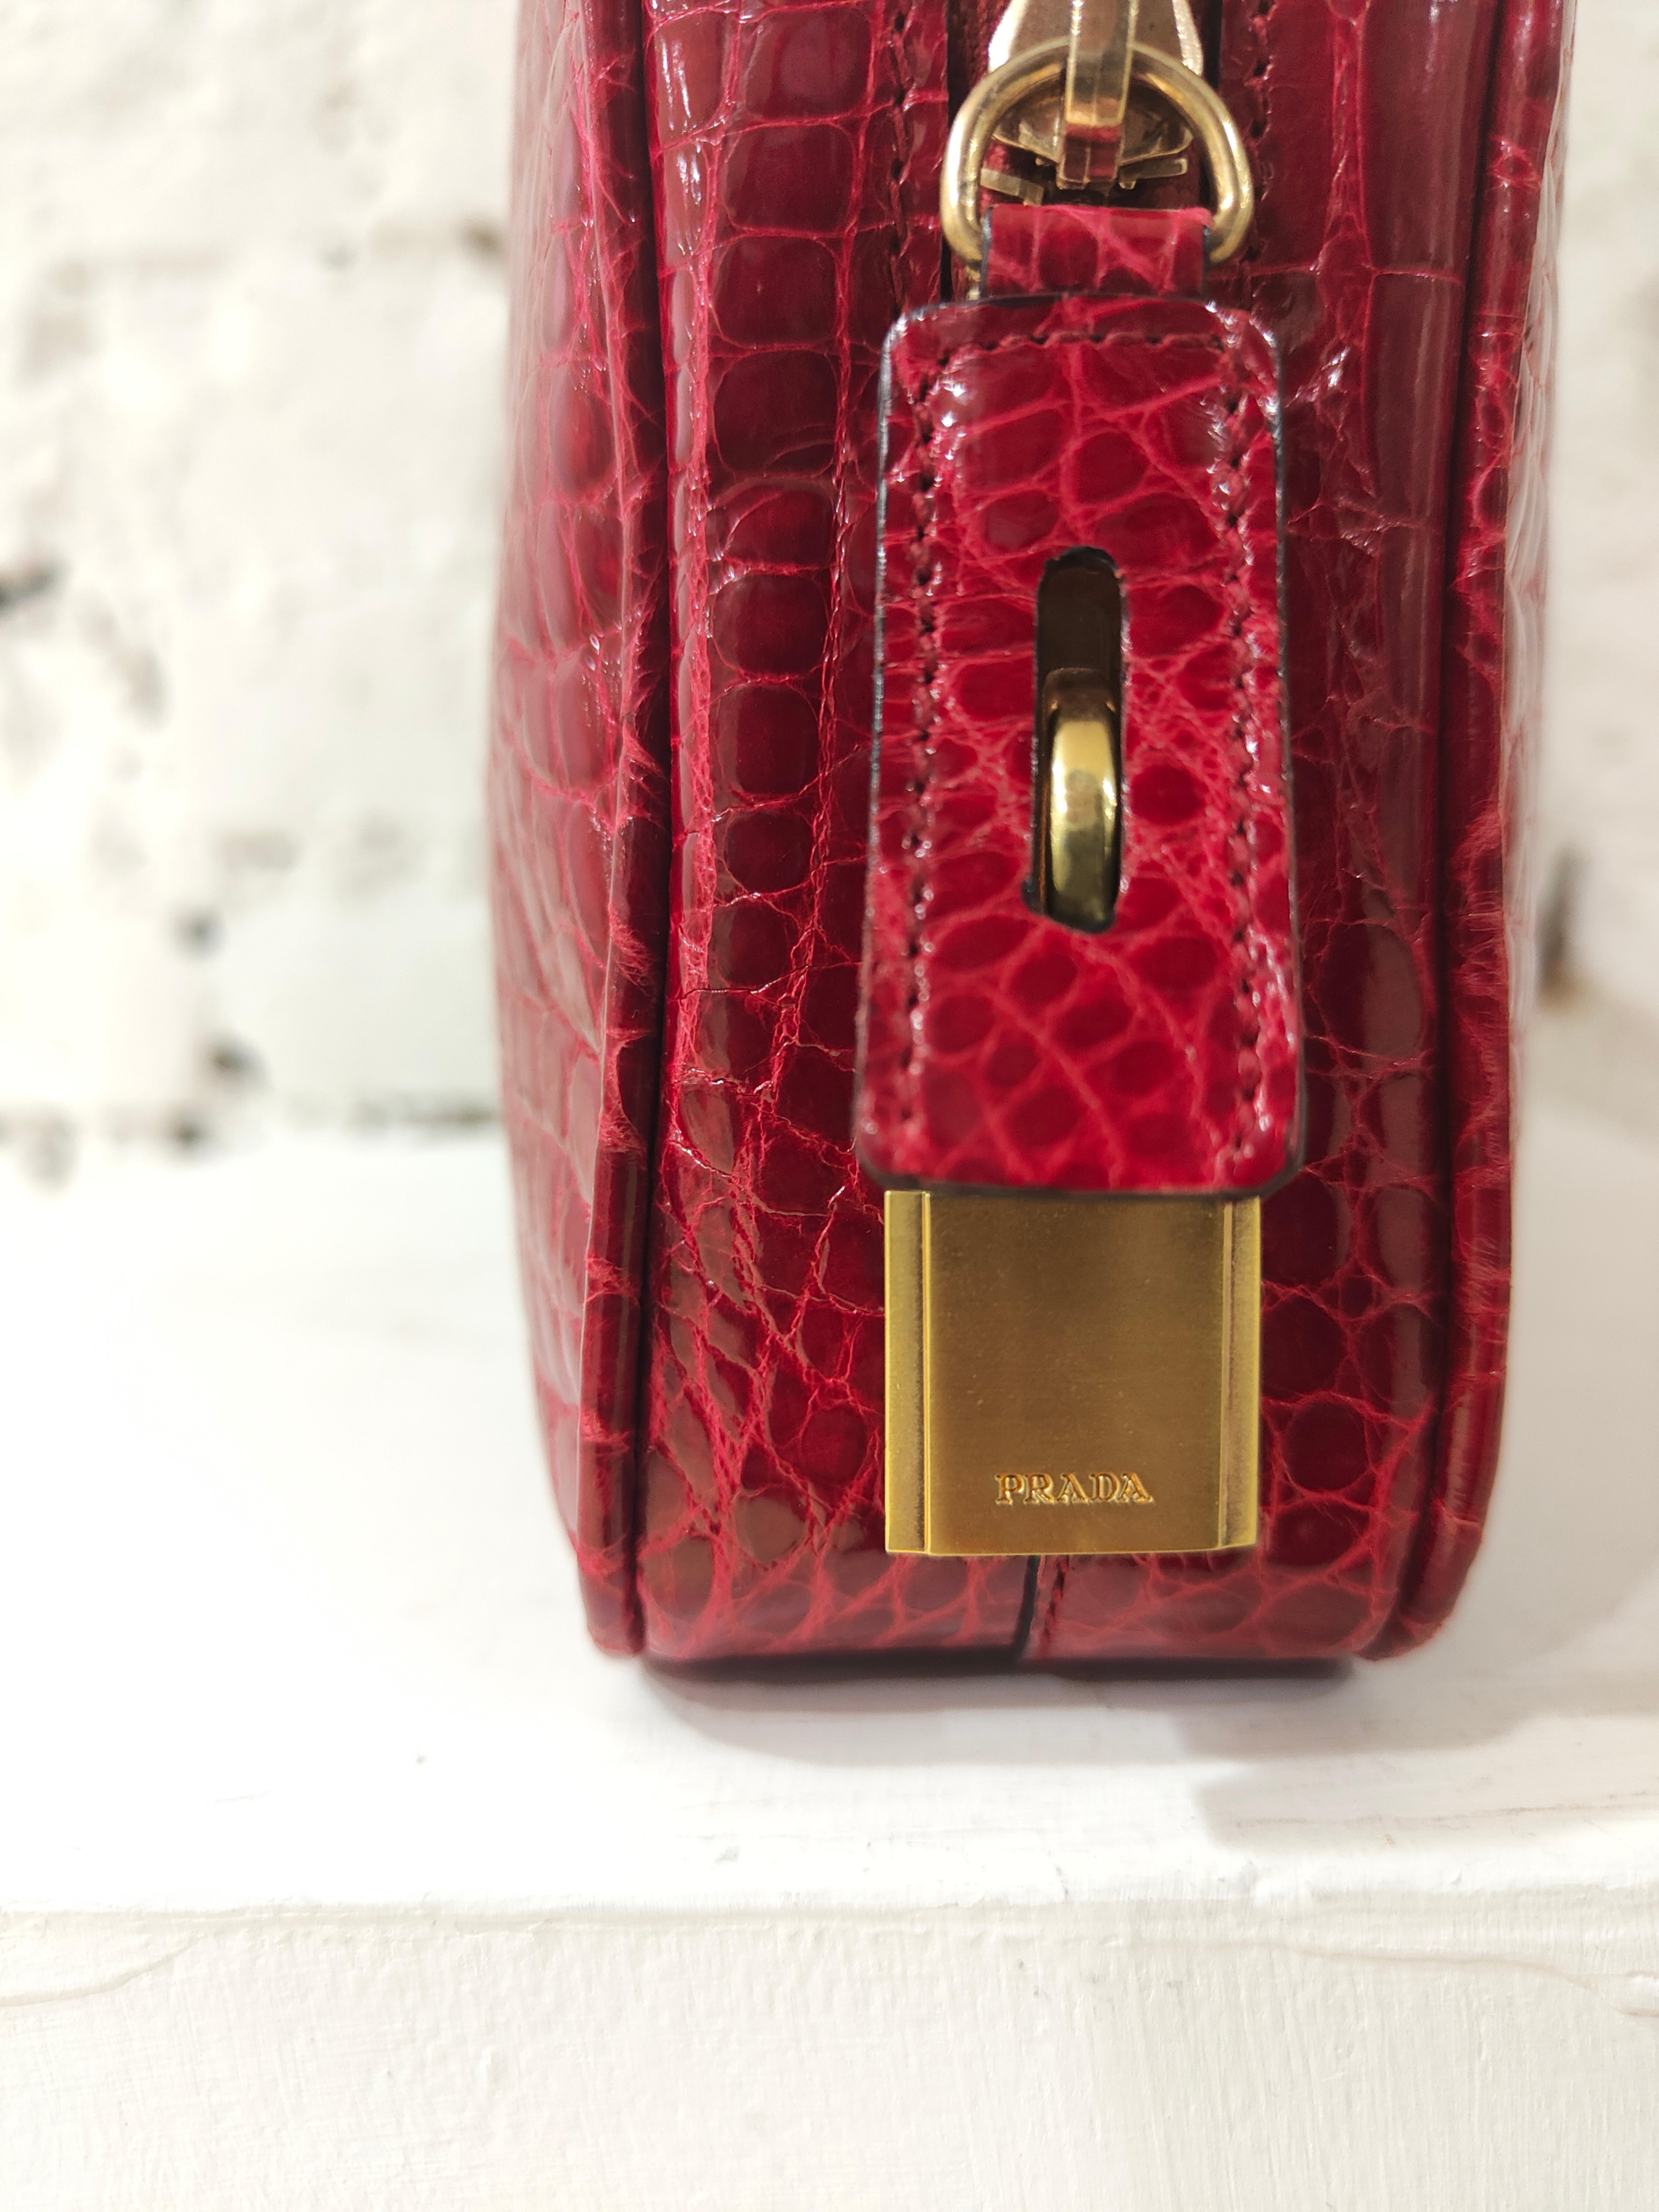 Prada red crocodile handbag
gold hardware
Width:22 cm
Height:13 cm
Depth:6 cm